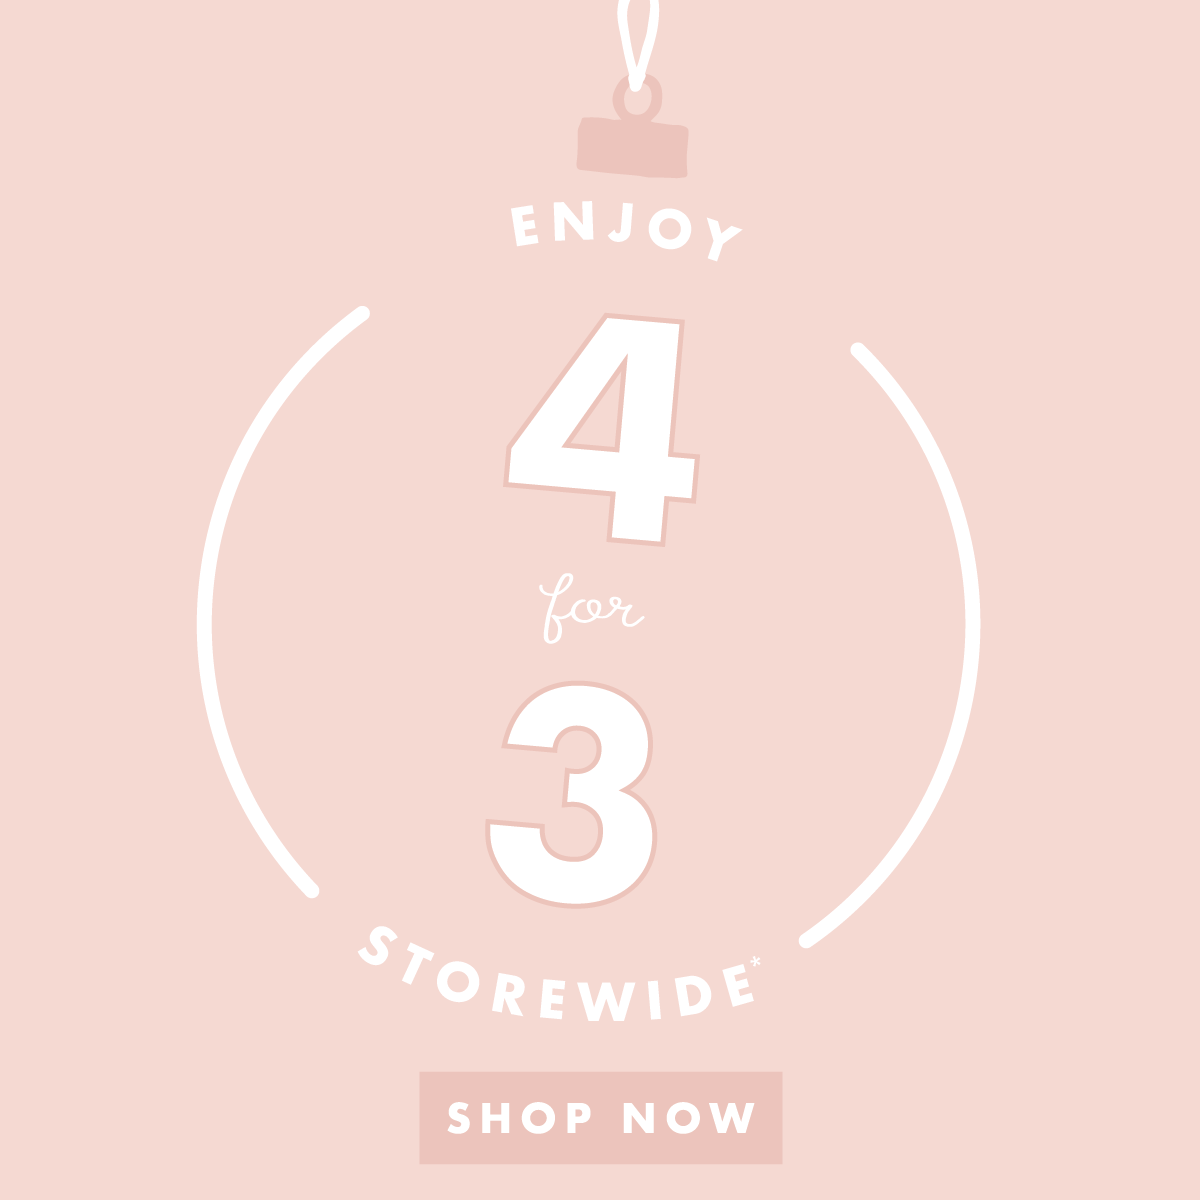 Enjoy 4 for 3 storewide*! Shop now. 